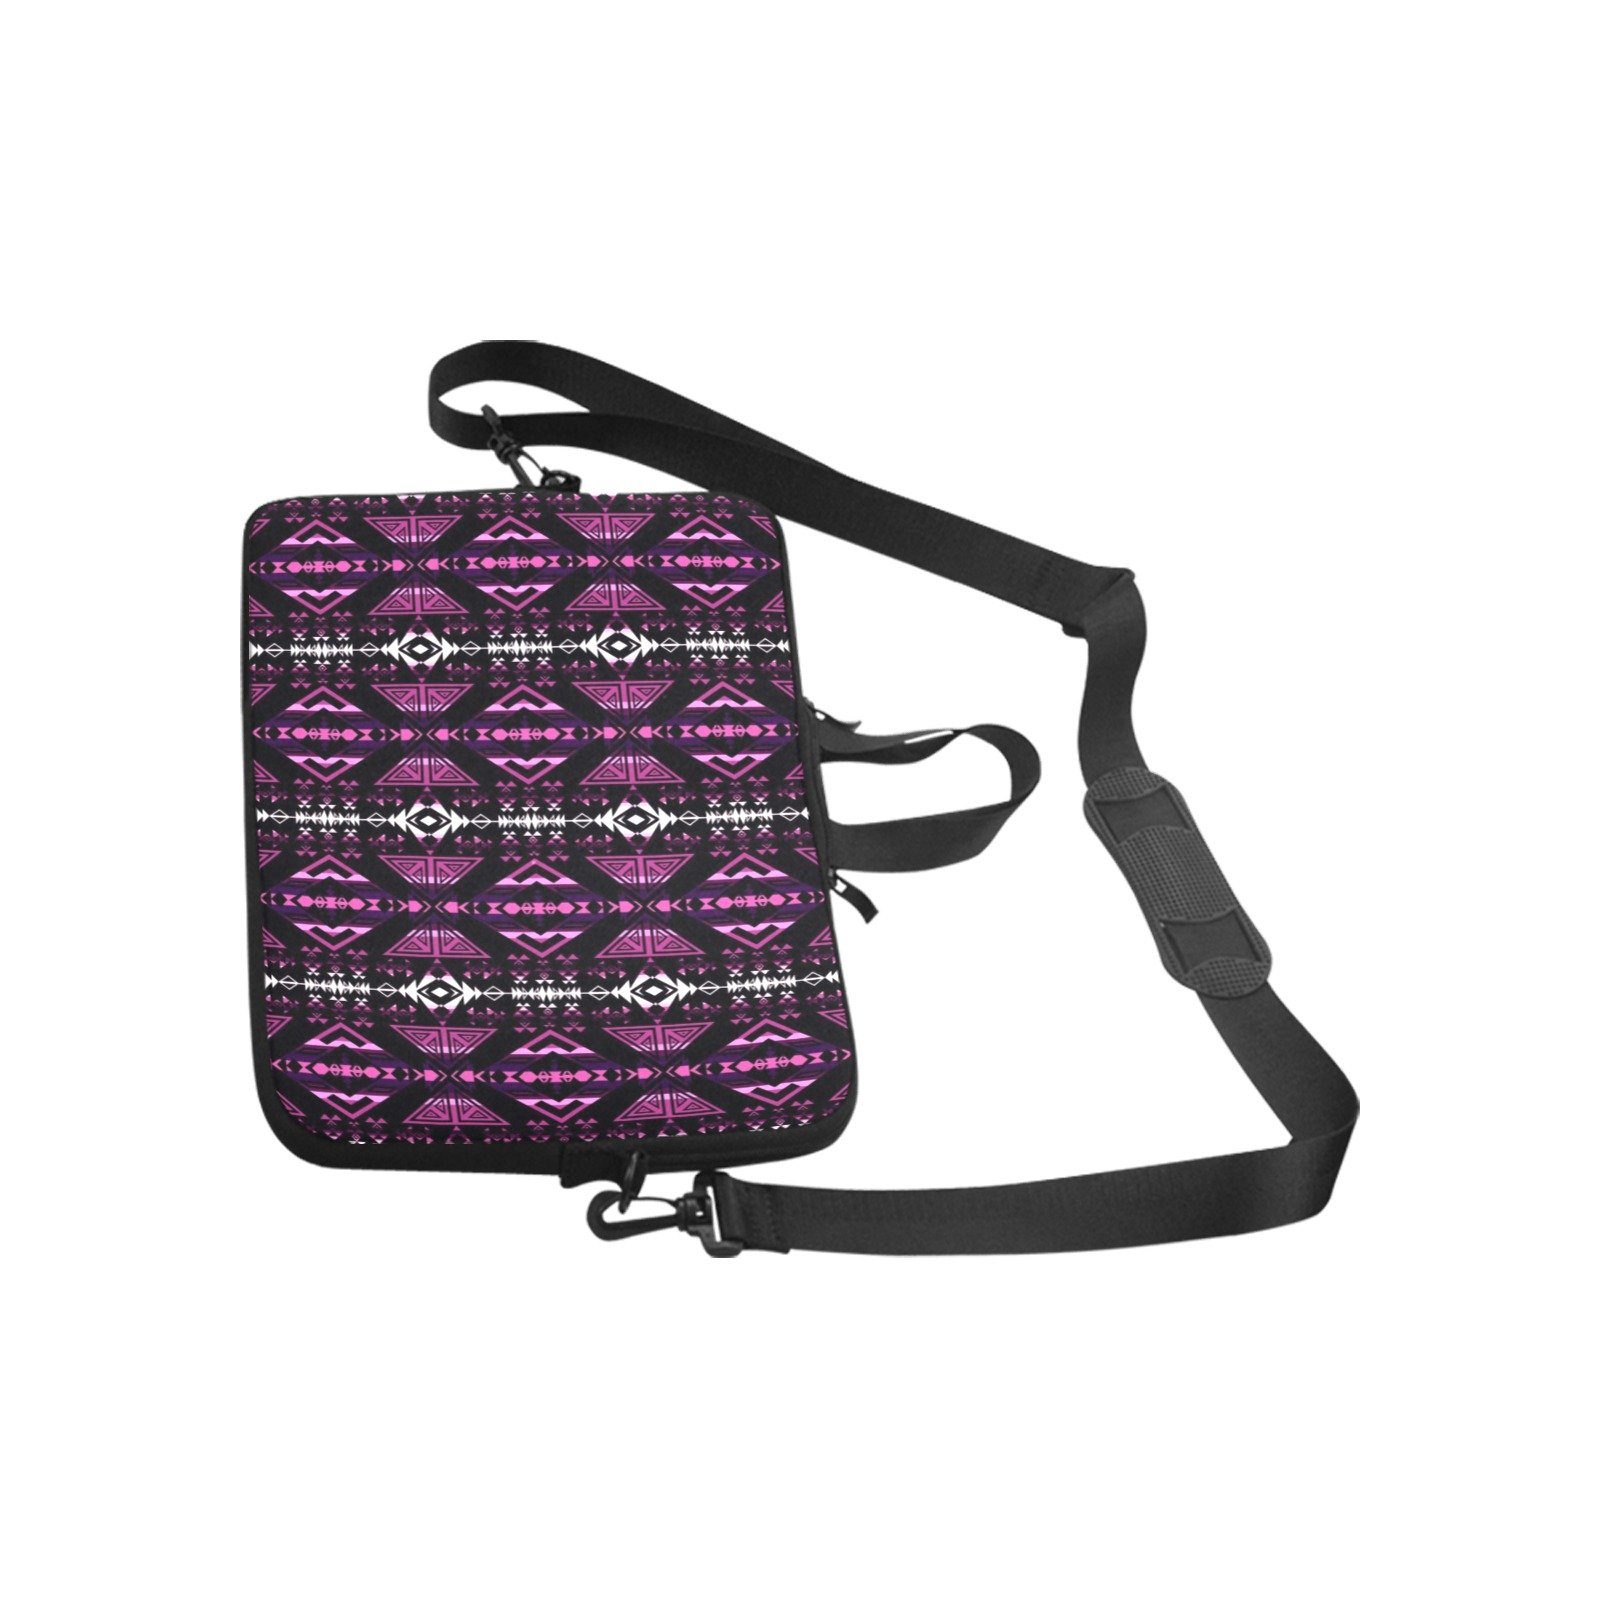 Upstream Expedition Moonlight Shadows Laptop Handbags 10" bag e-joyer 